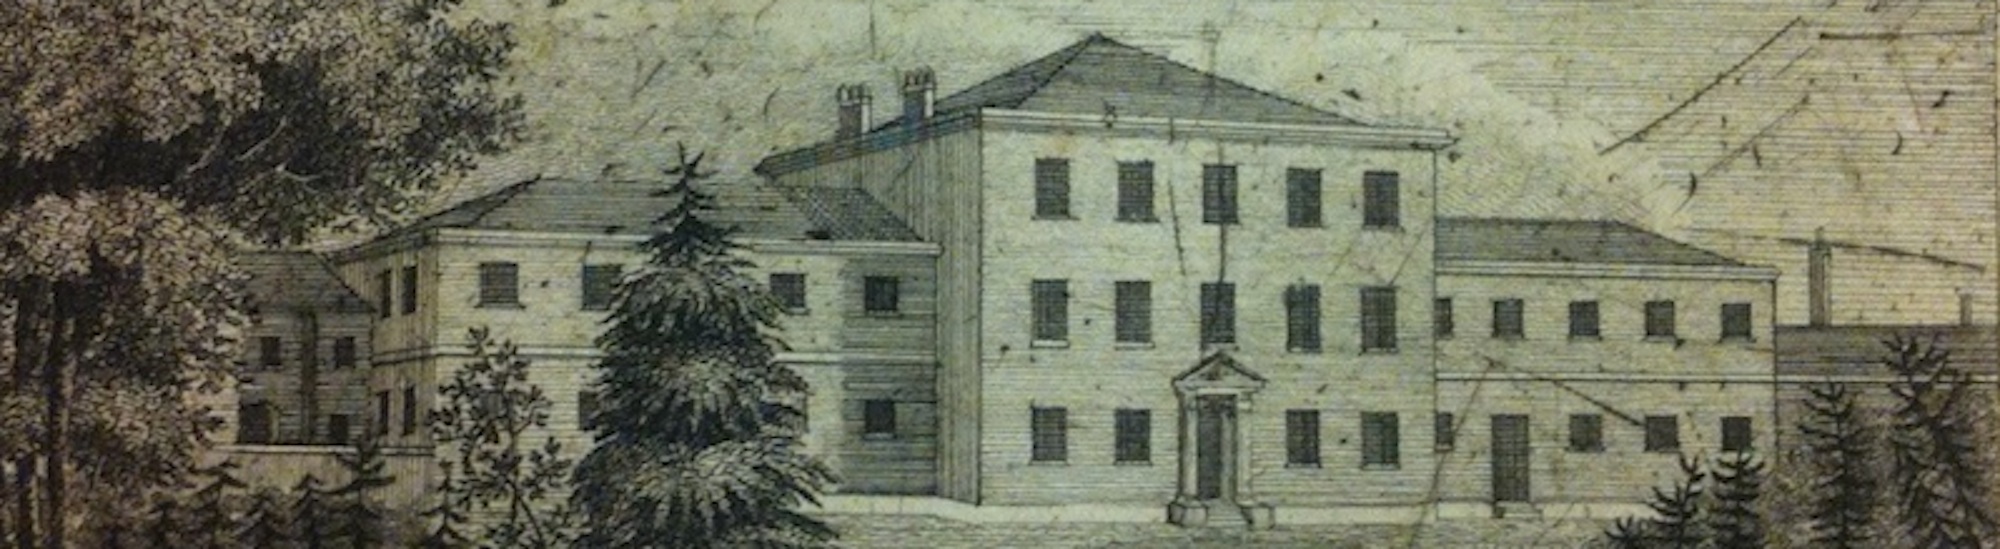 etching of York Retreat